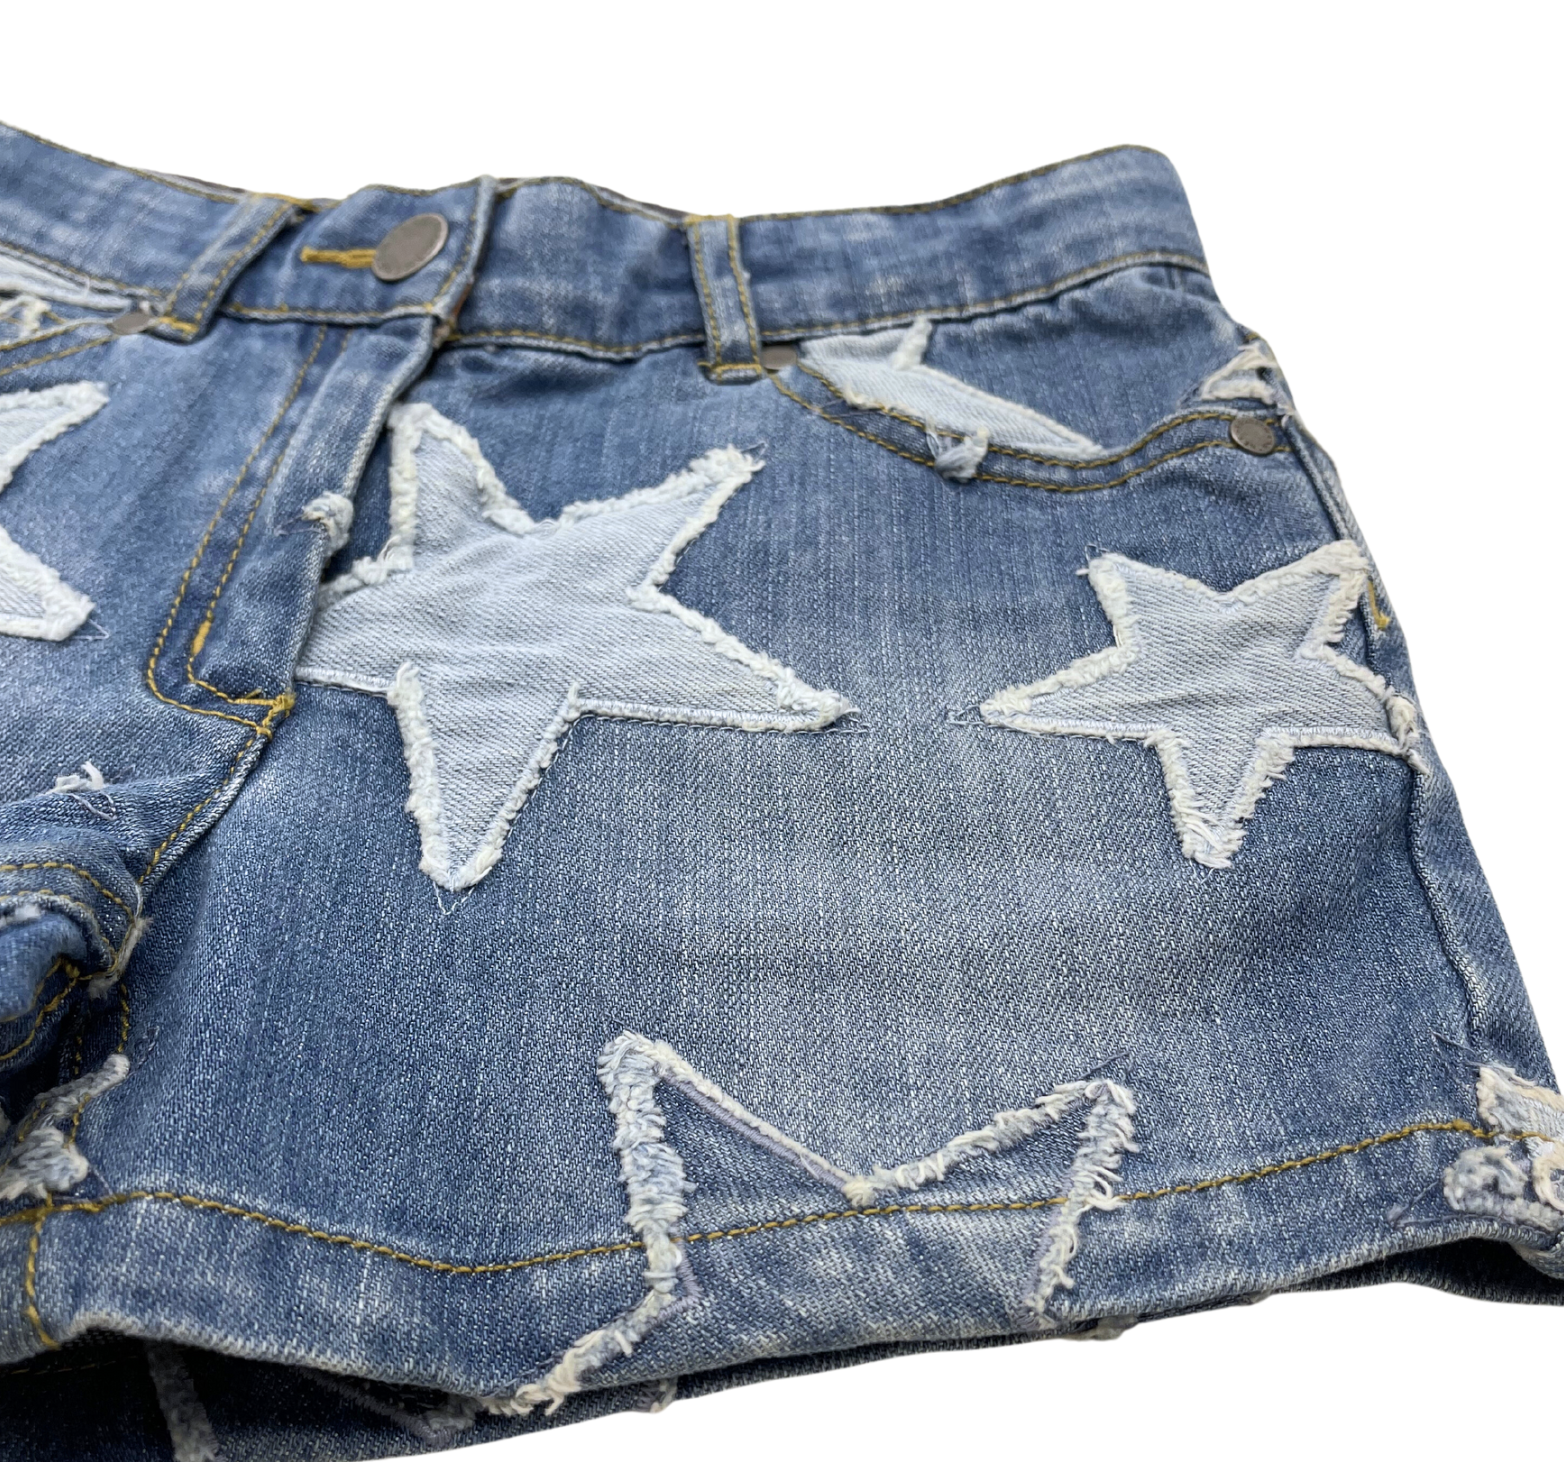 STELLA MCCARTNEY - Star denim shorts - 6 years old